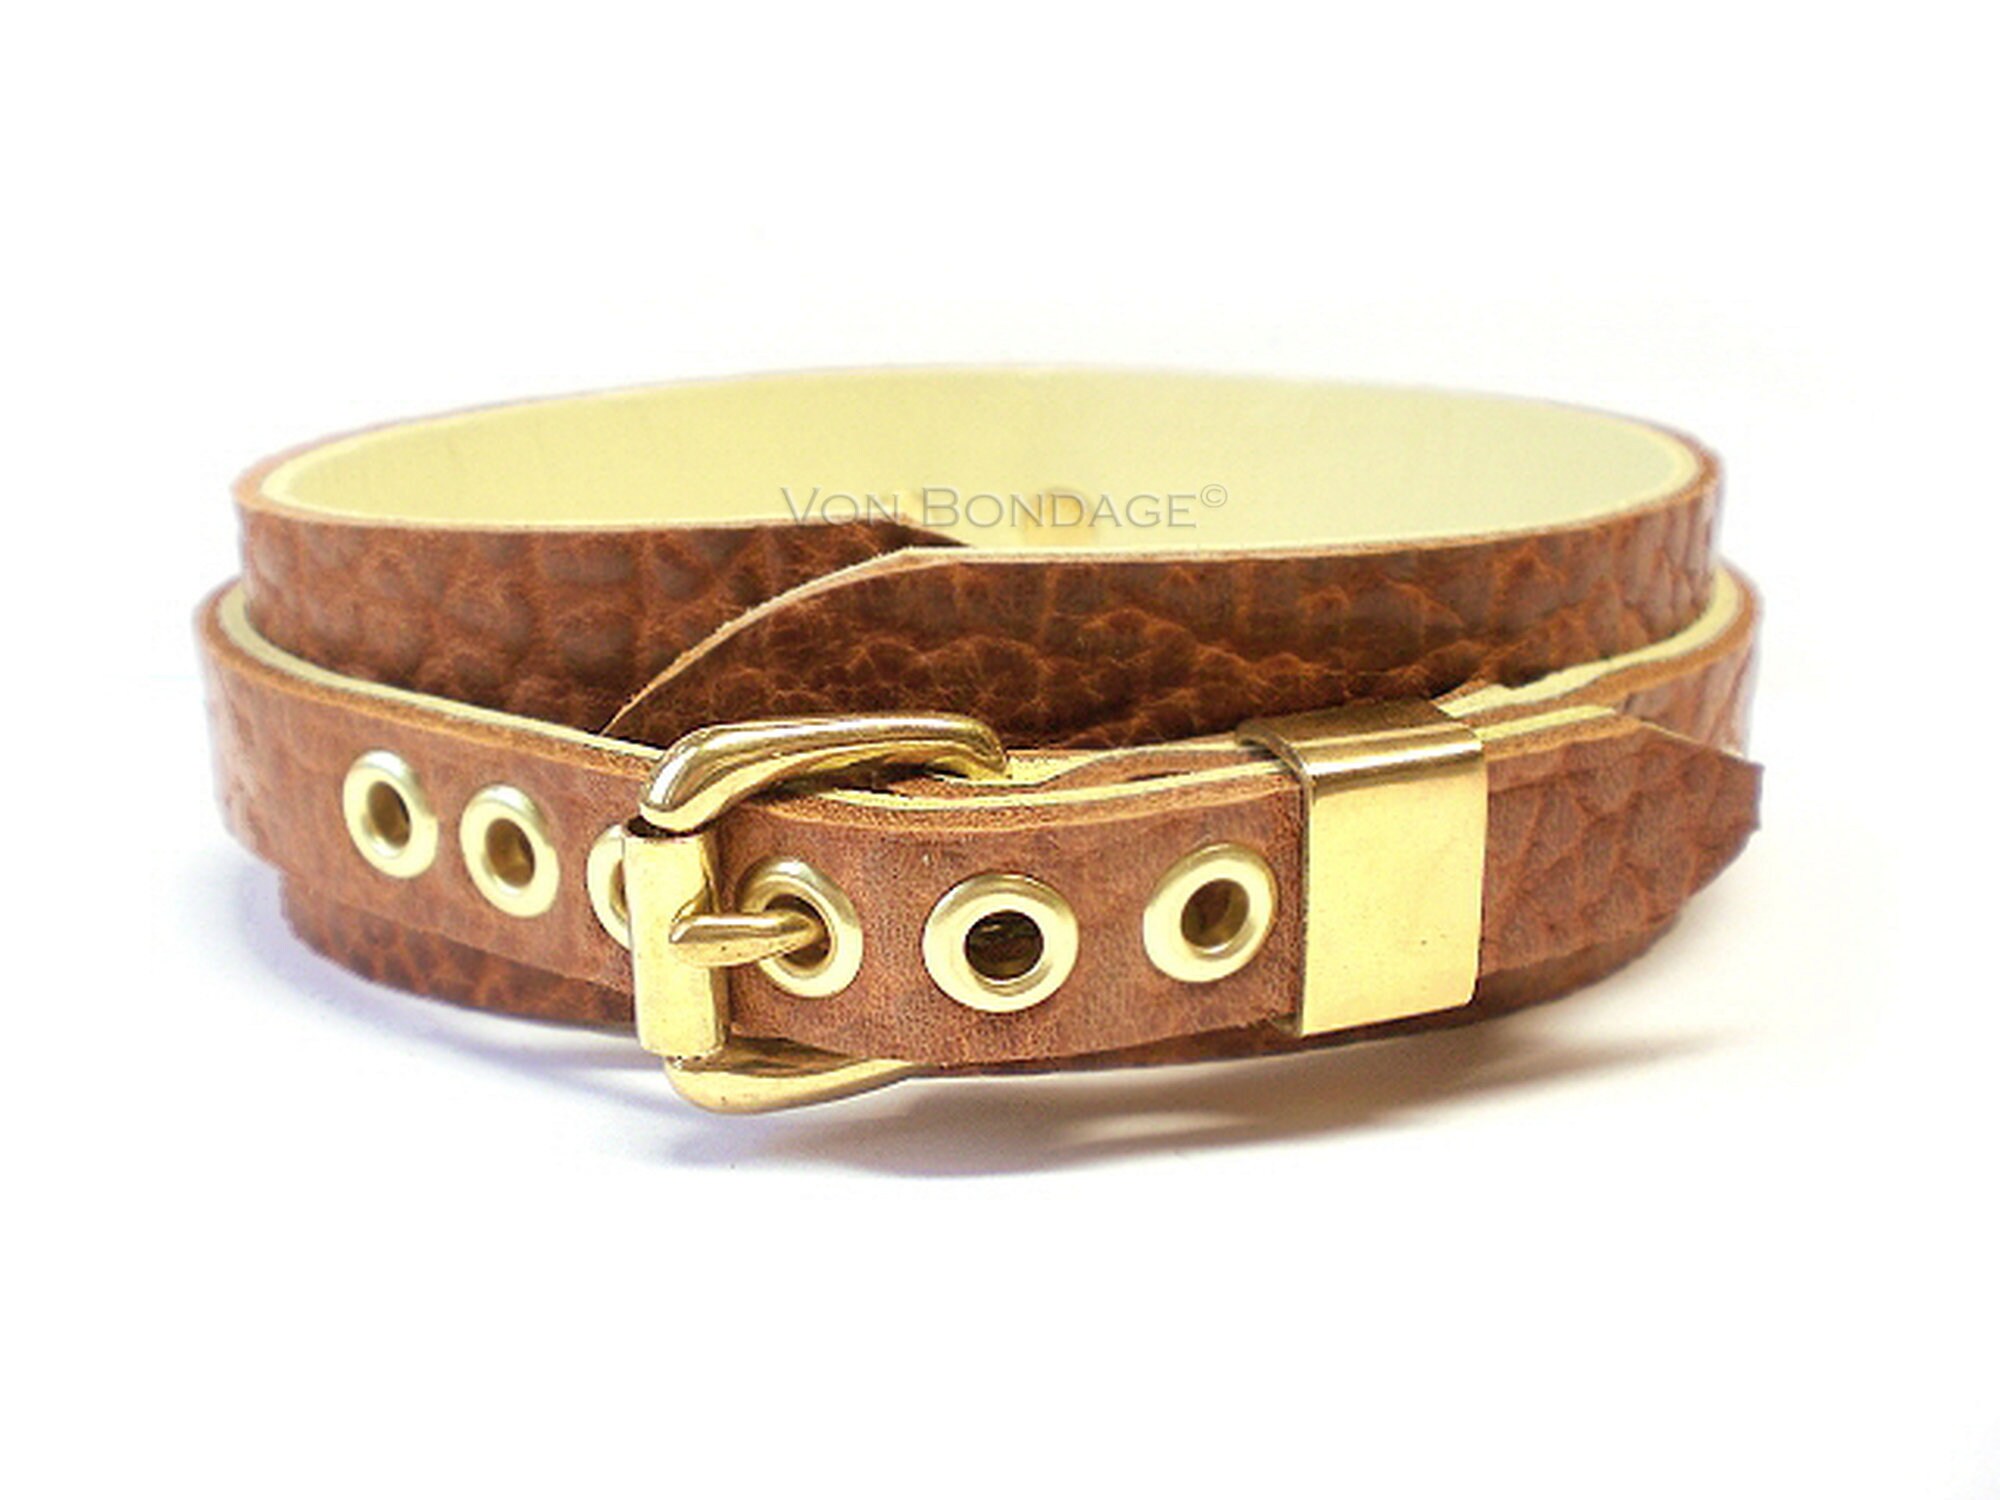 BDSM Collar w/3 Brass Rings, Bondage Collar, in Bullhide Leather for slave sub, leather bdsm gear, bondage gear, custom slave collar, 1-1/2" photo